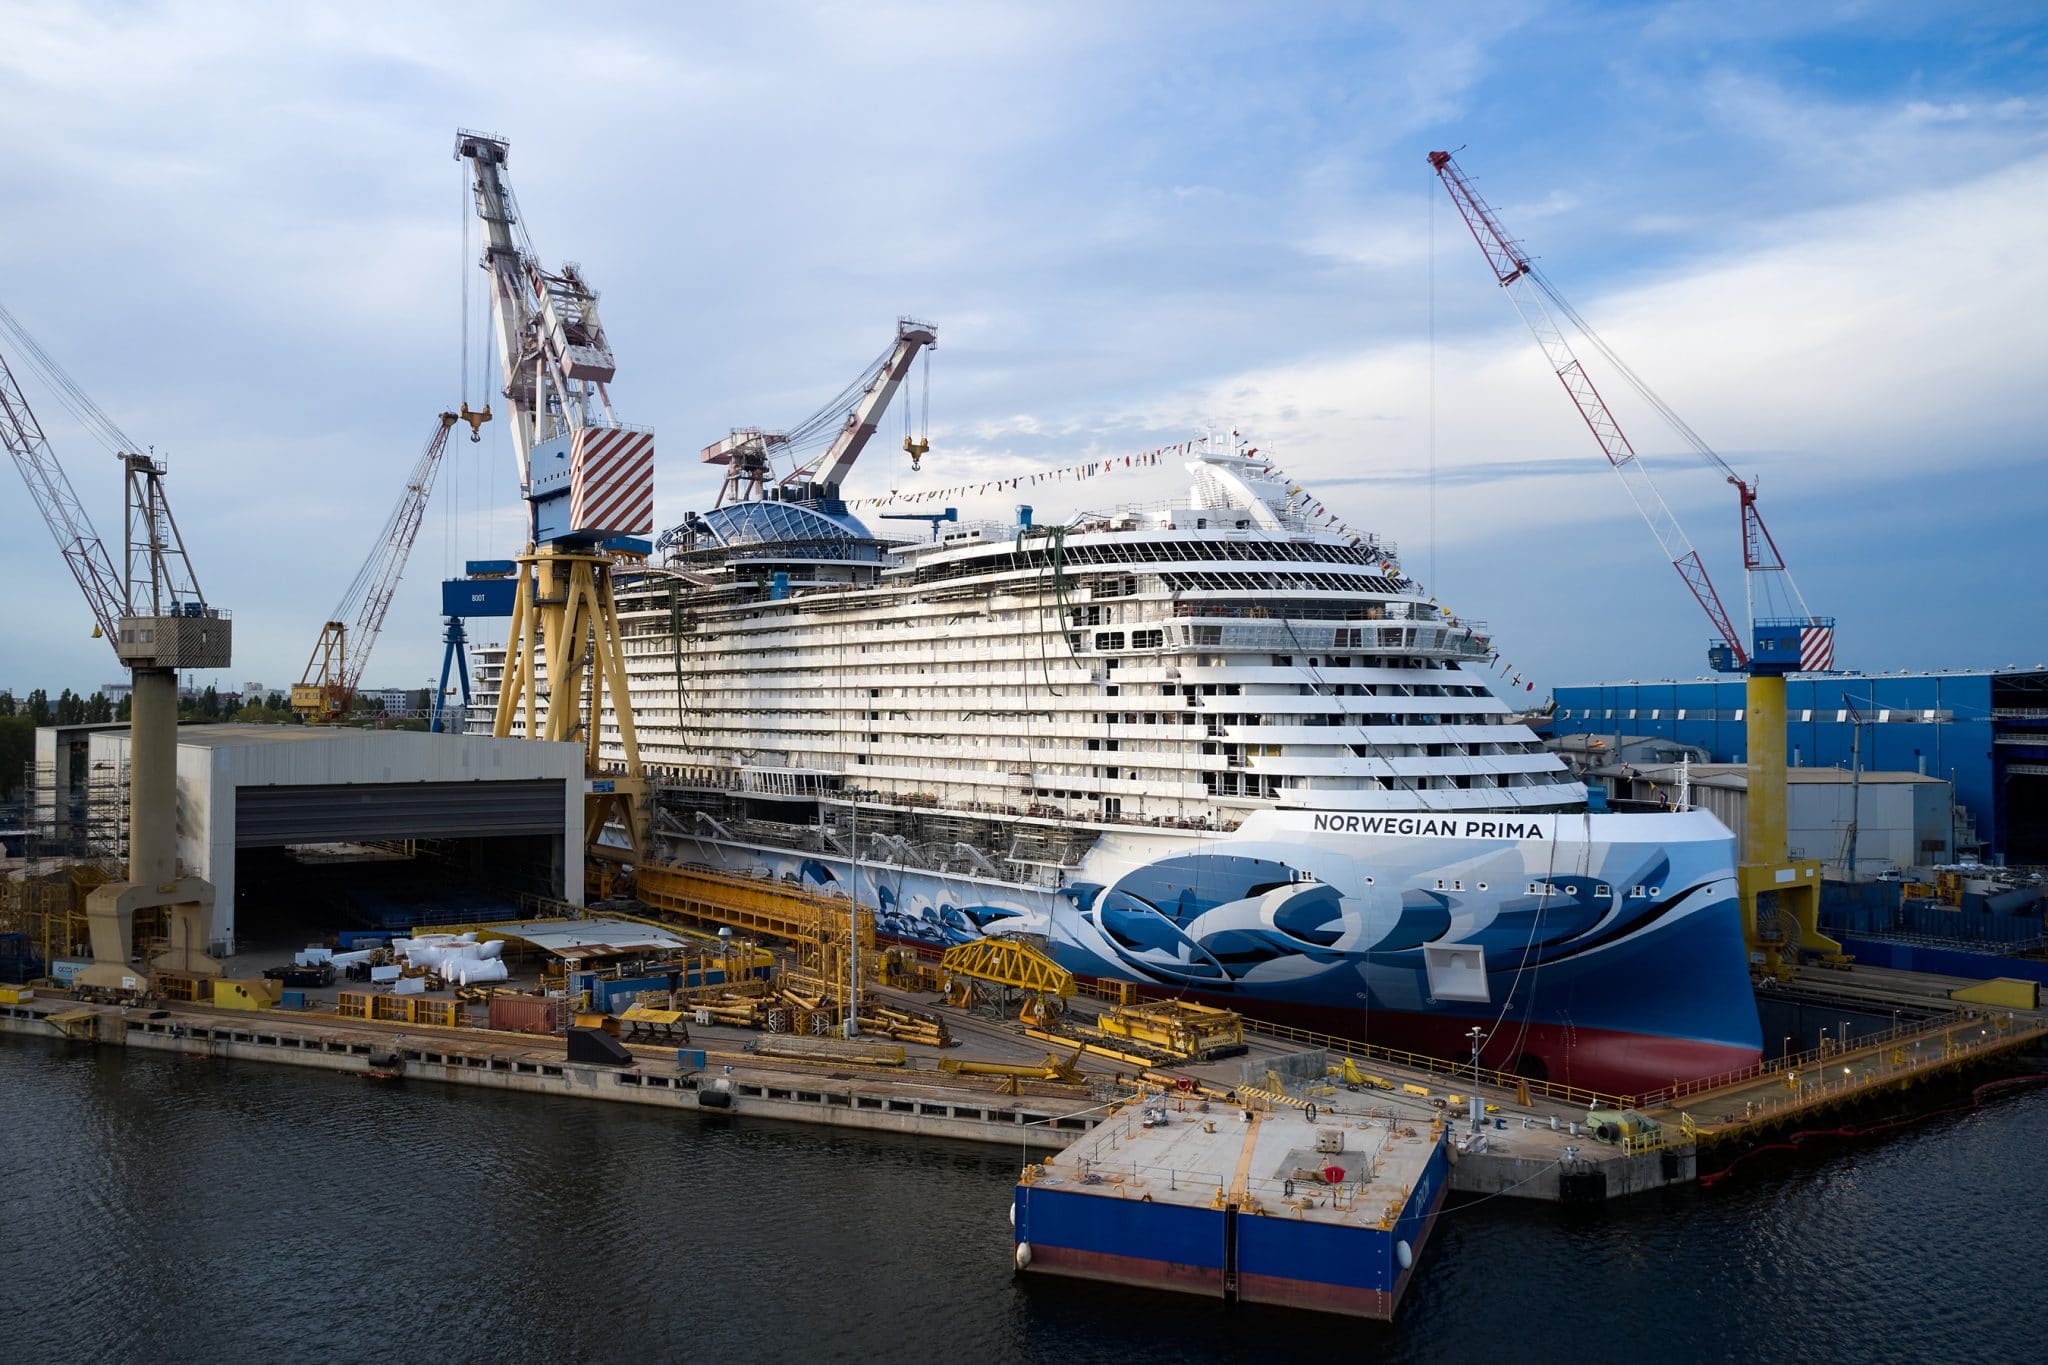 Norwegian Cruise Line's Next New Ship Completes Construction Milestone